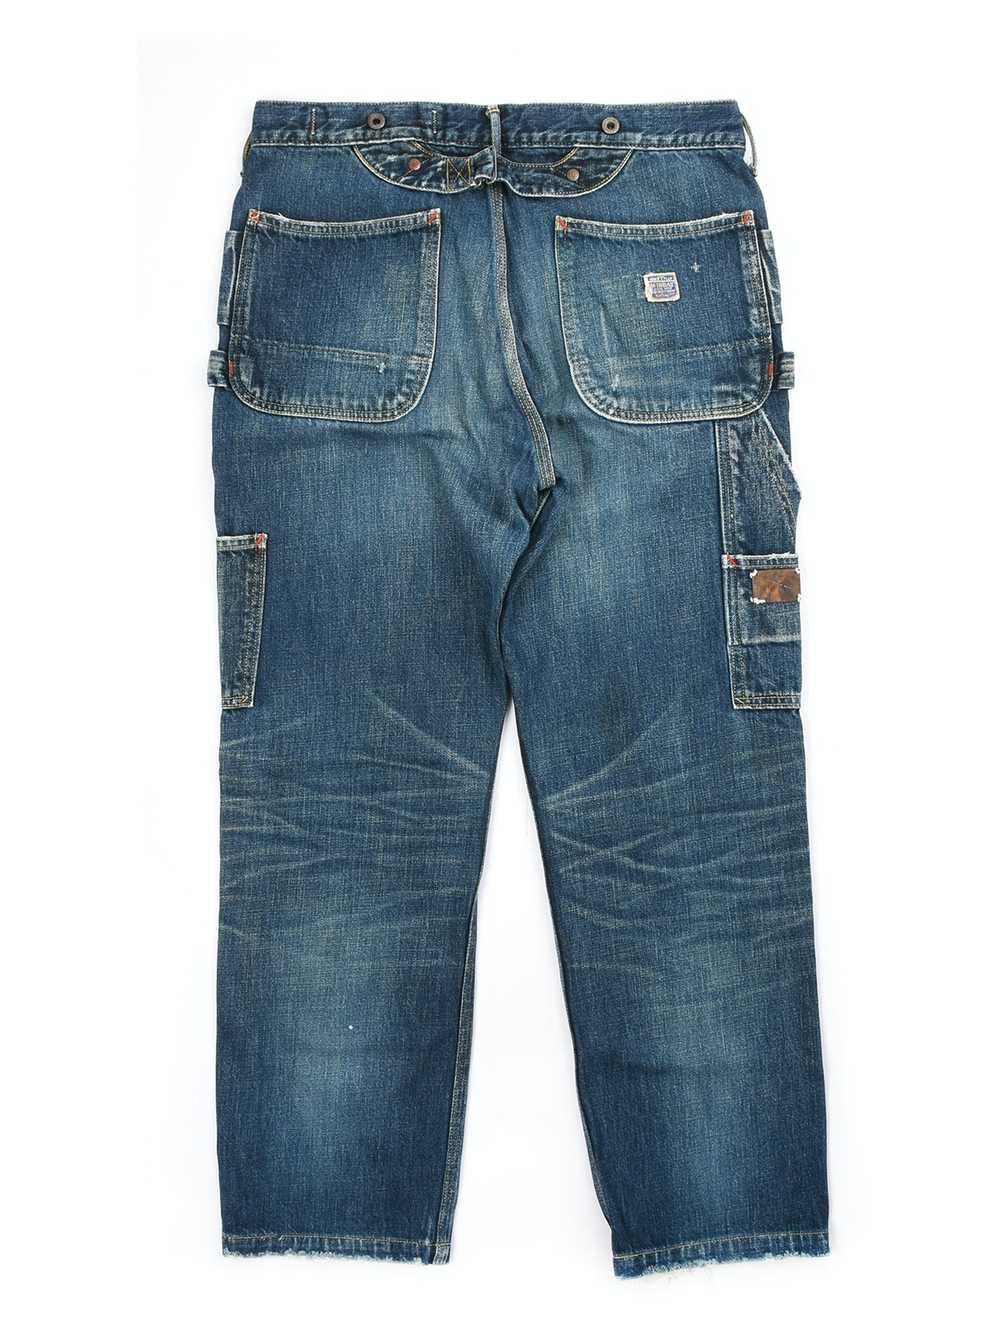 Kapital Carpenter Jeans - image 2